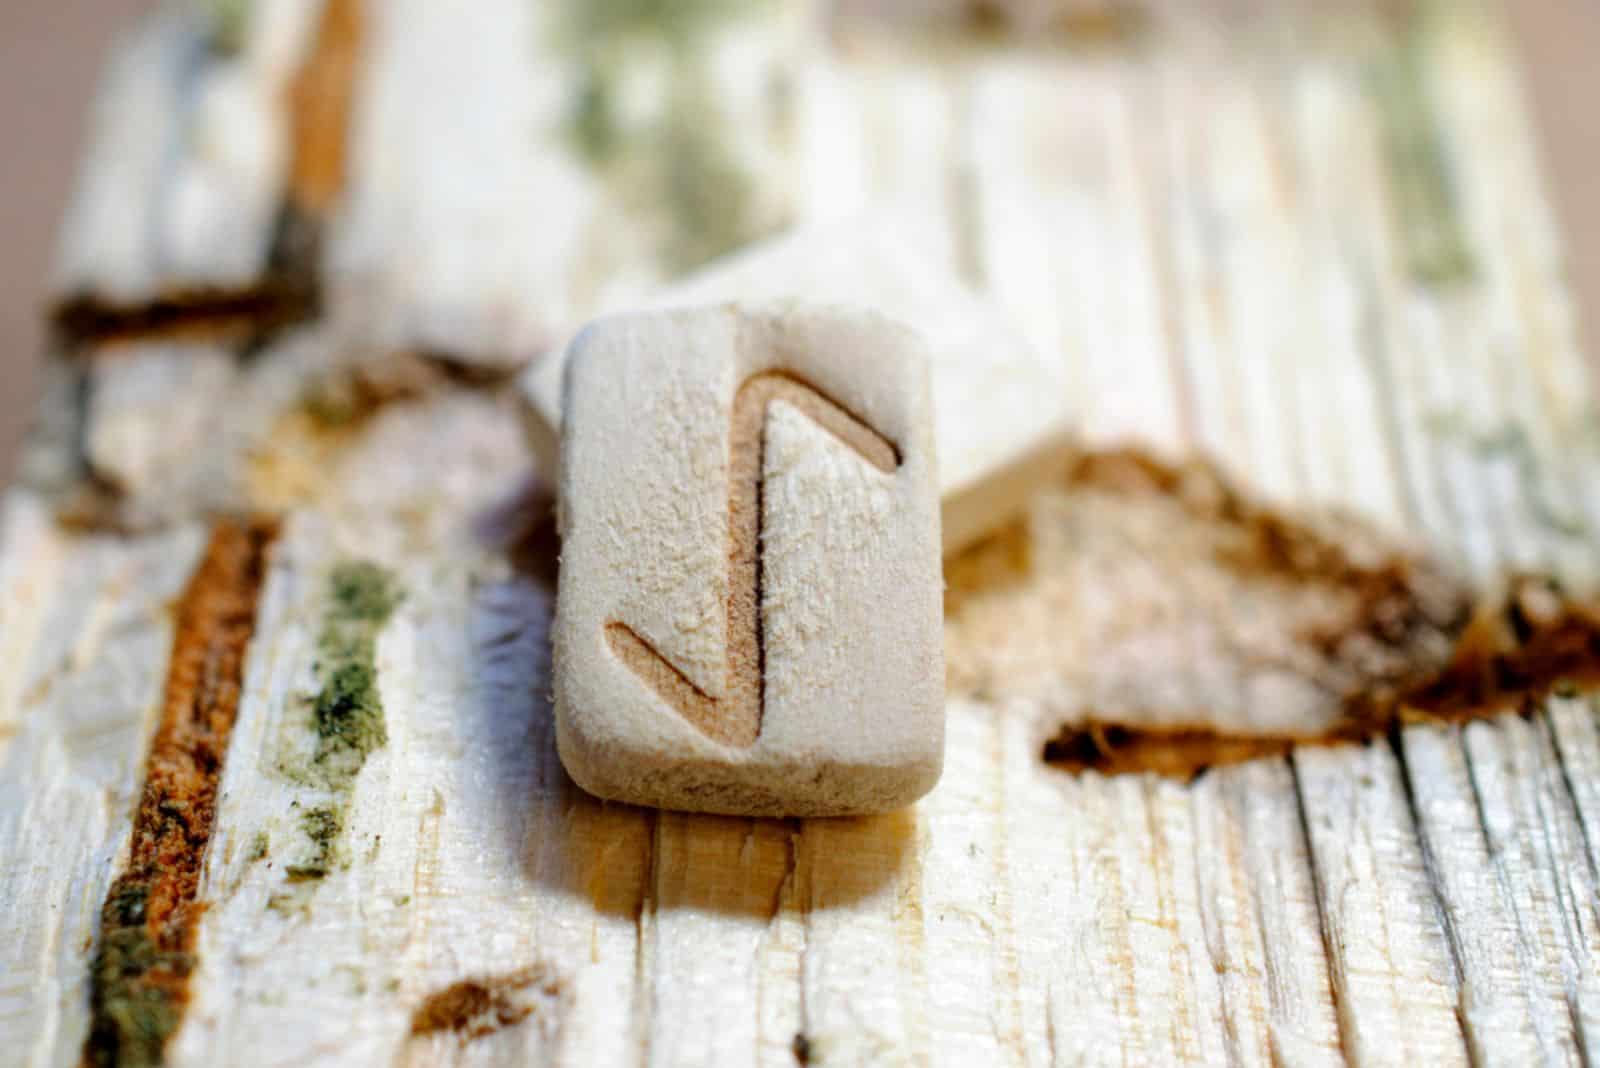 Rune en bois Eihwaz gros plan sur un fond en bois